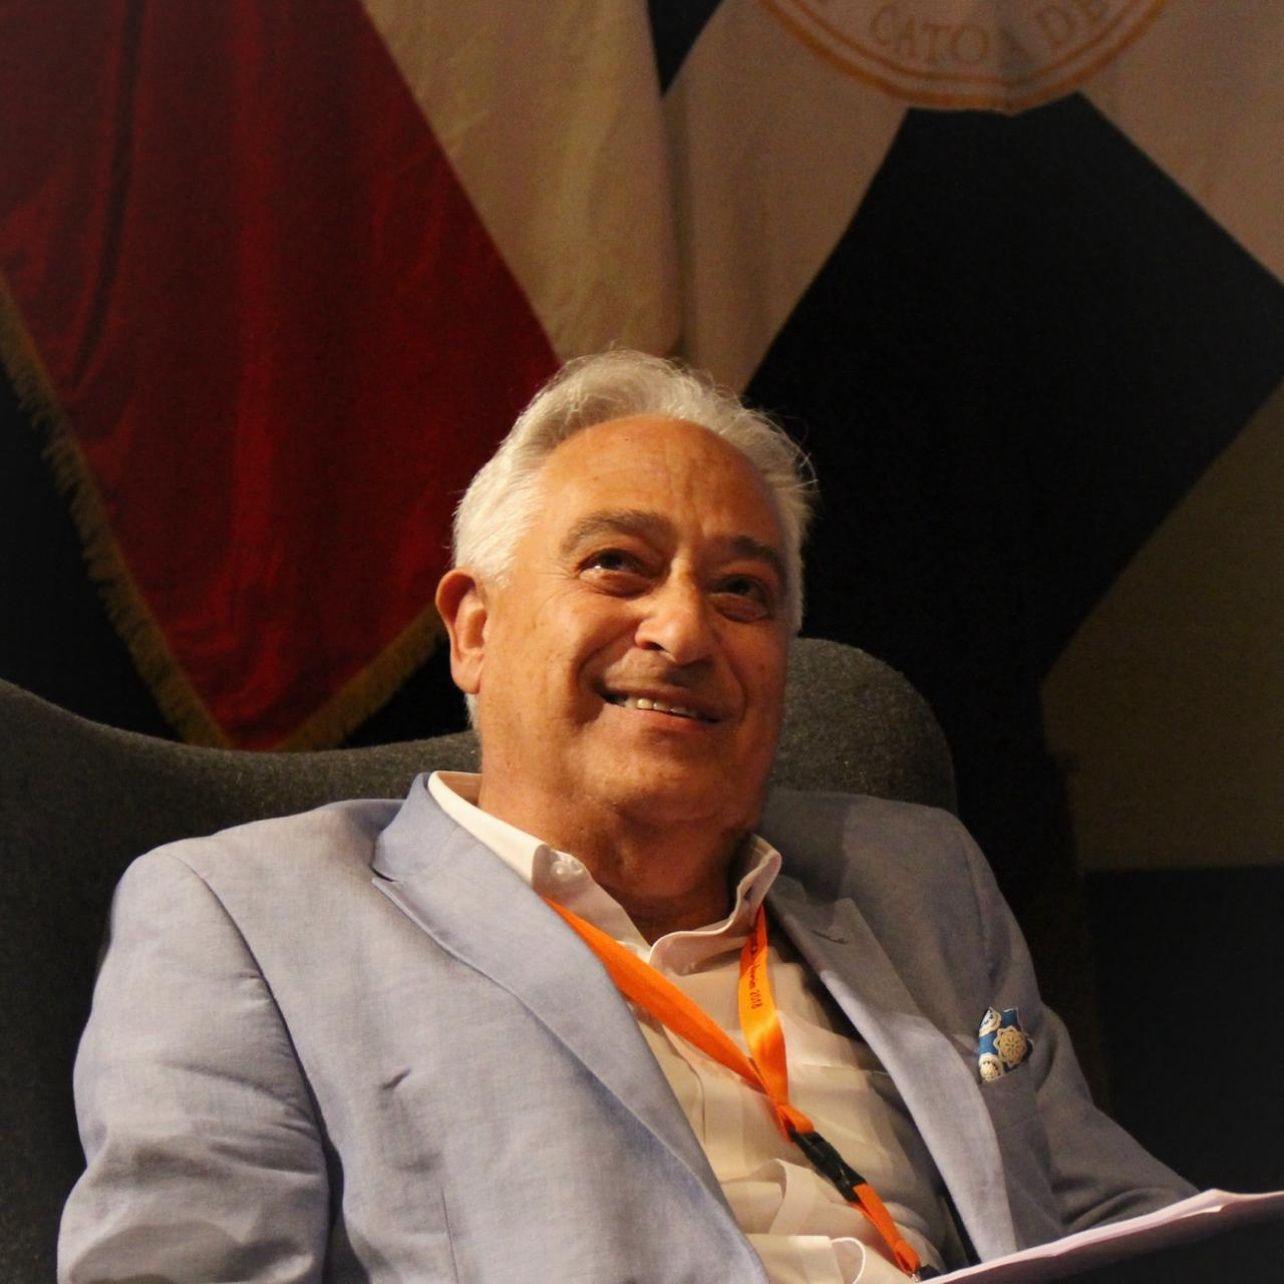 Pedro Ortigosa en Congreso Sochige 2018, en UTFSM. Gentileza: Sochige